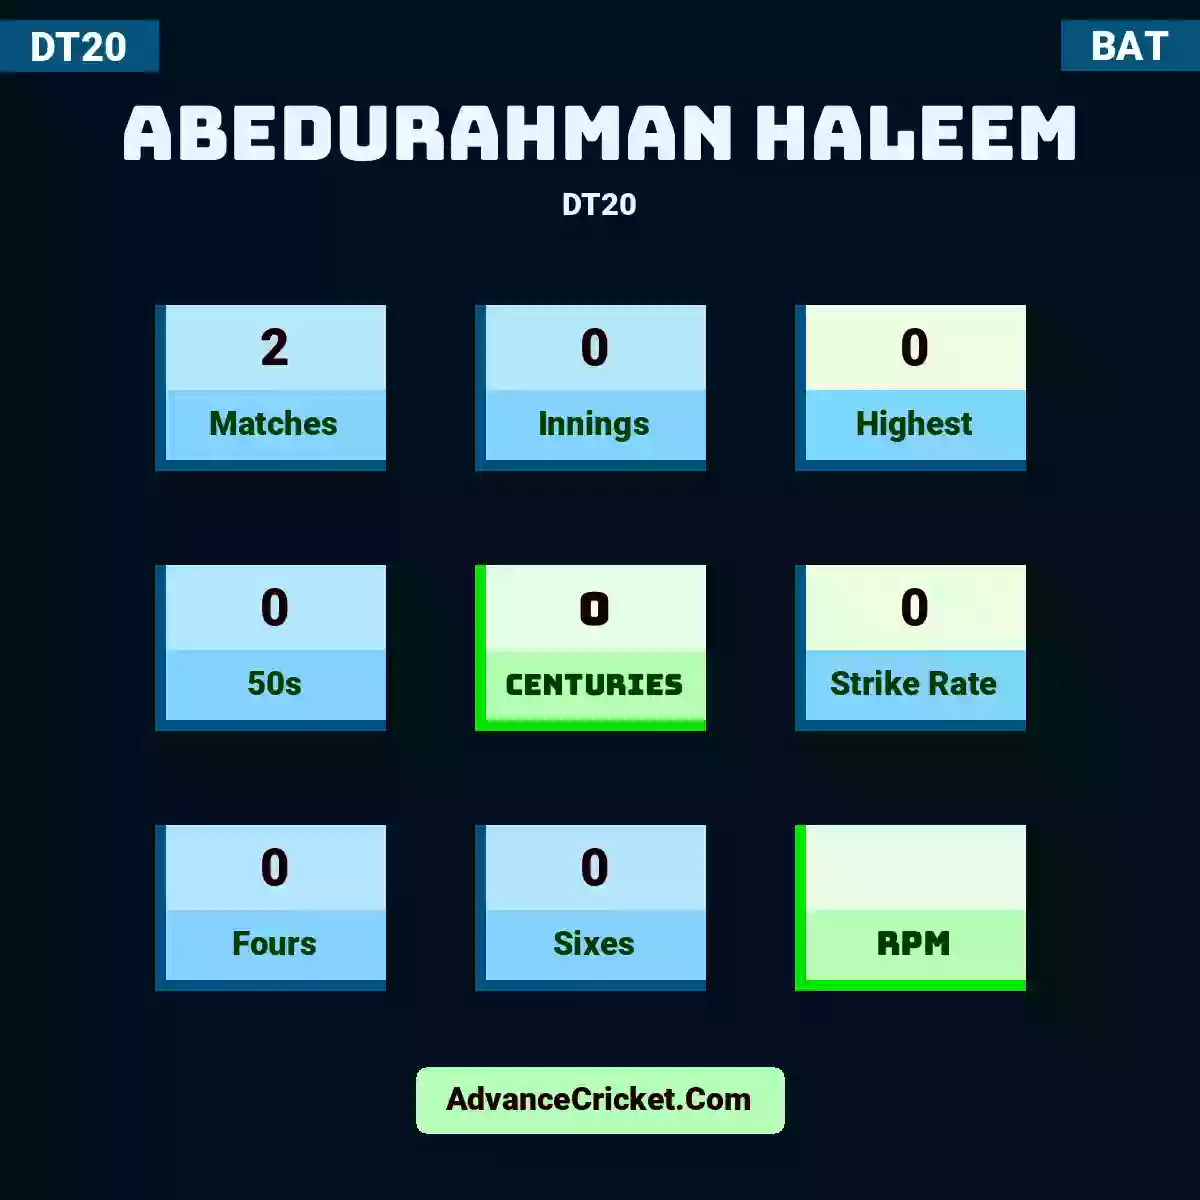 Abedurahman Haleem DT20 , Abedurahman Haleem played 2 matches, scored 0 runs as highest, 0 half-centuries, and 0 centuries, with a strike rate of 0. A.Haleem hit 0 fours and 0 sixes.